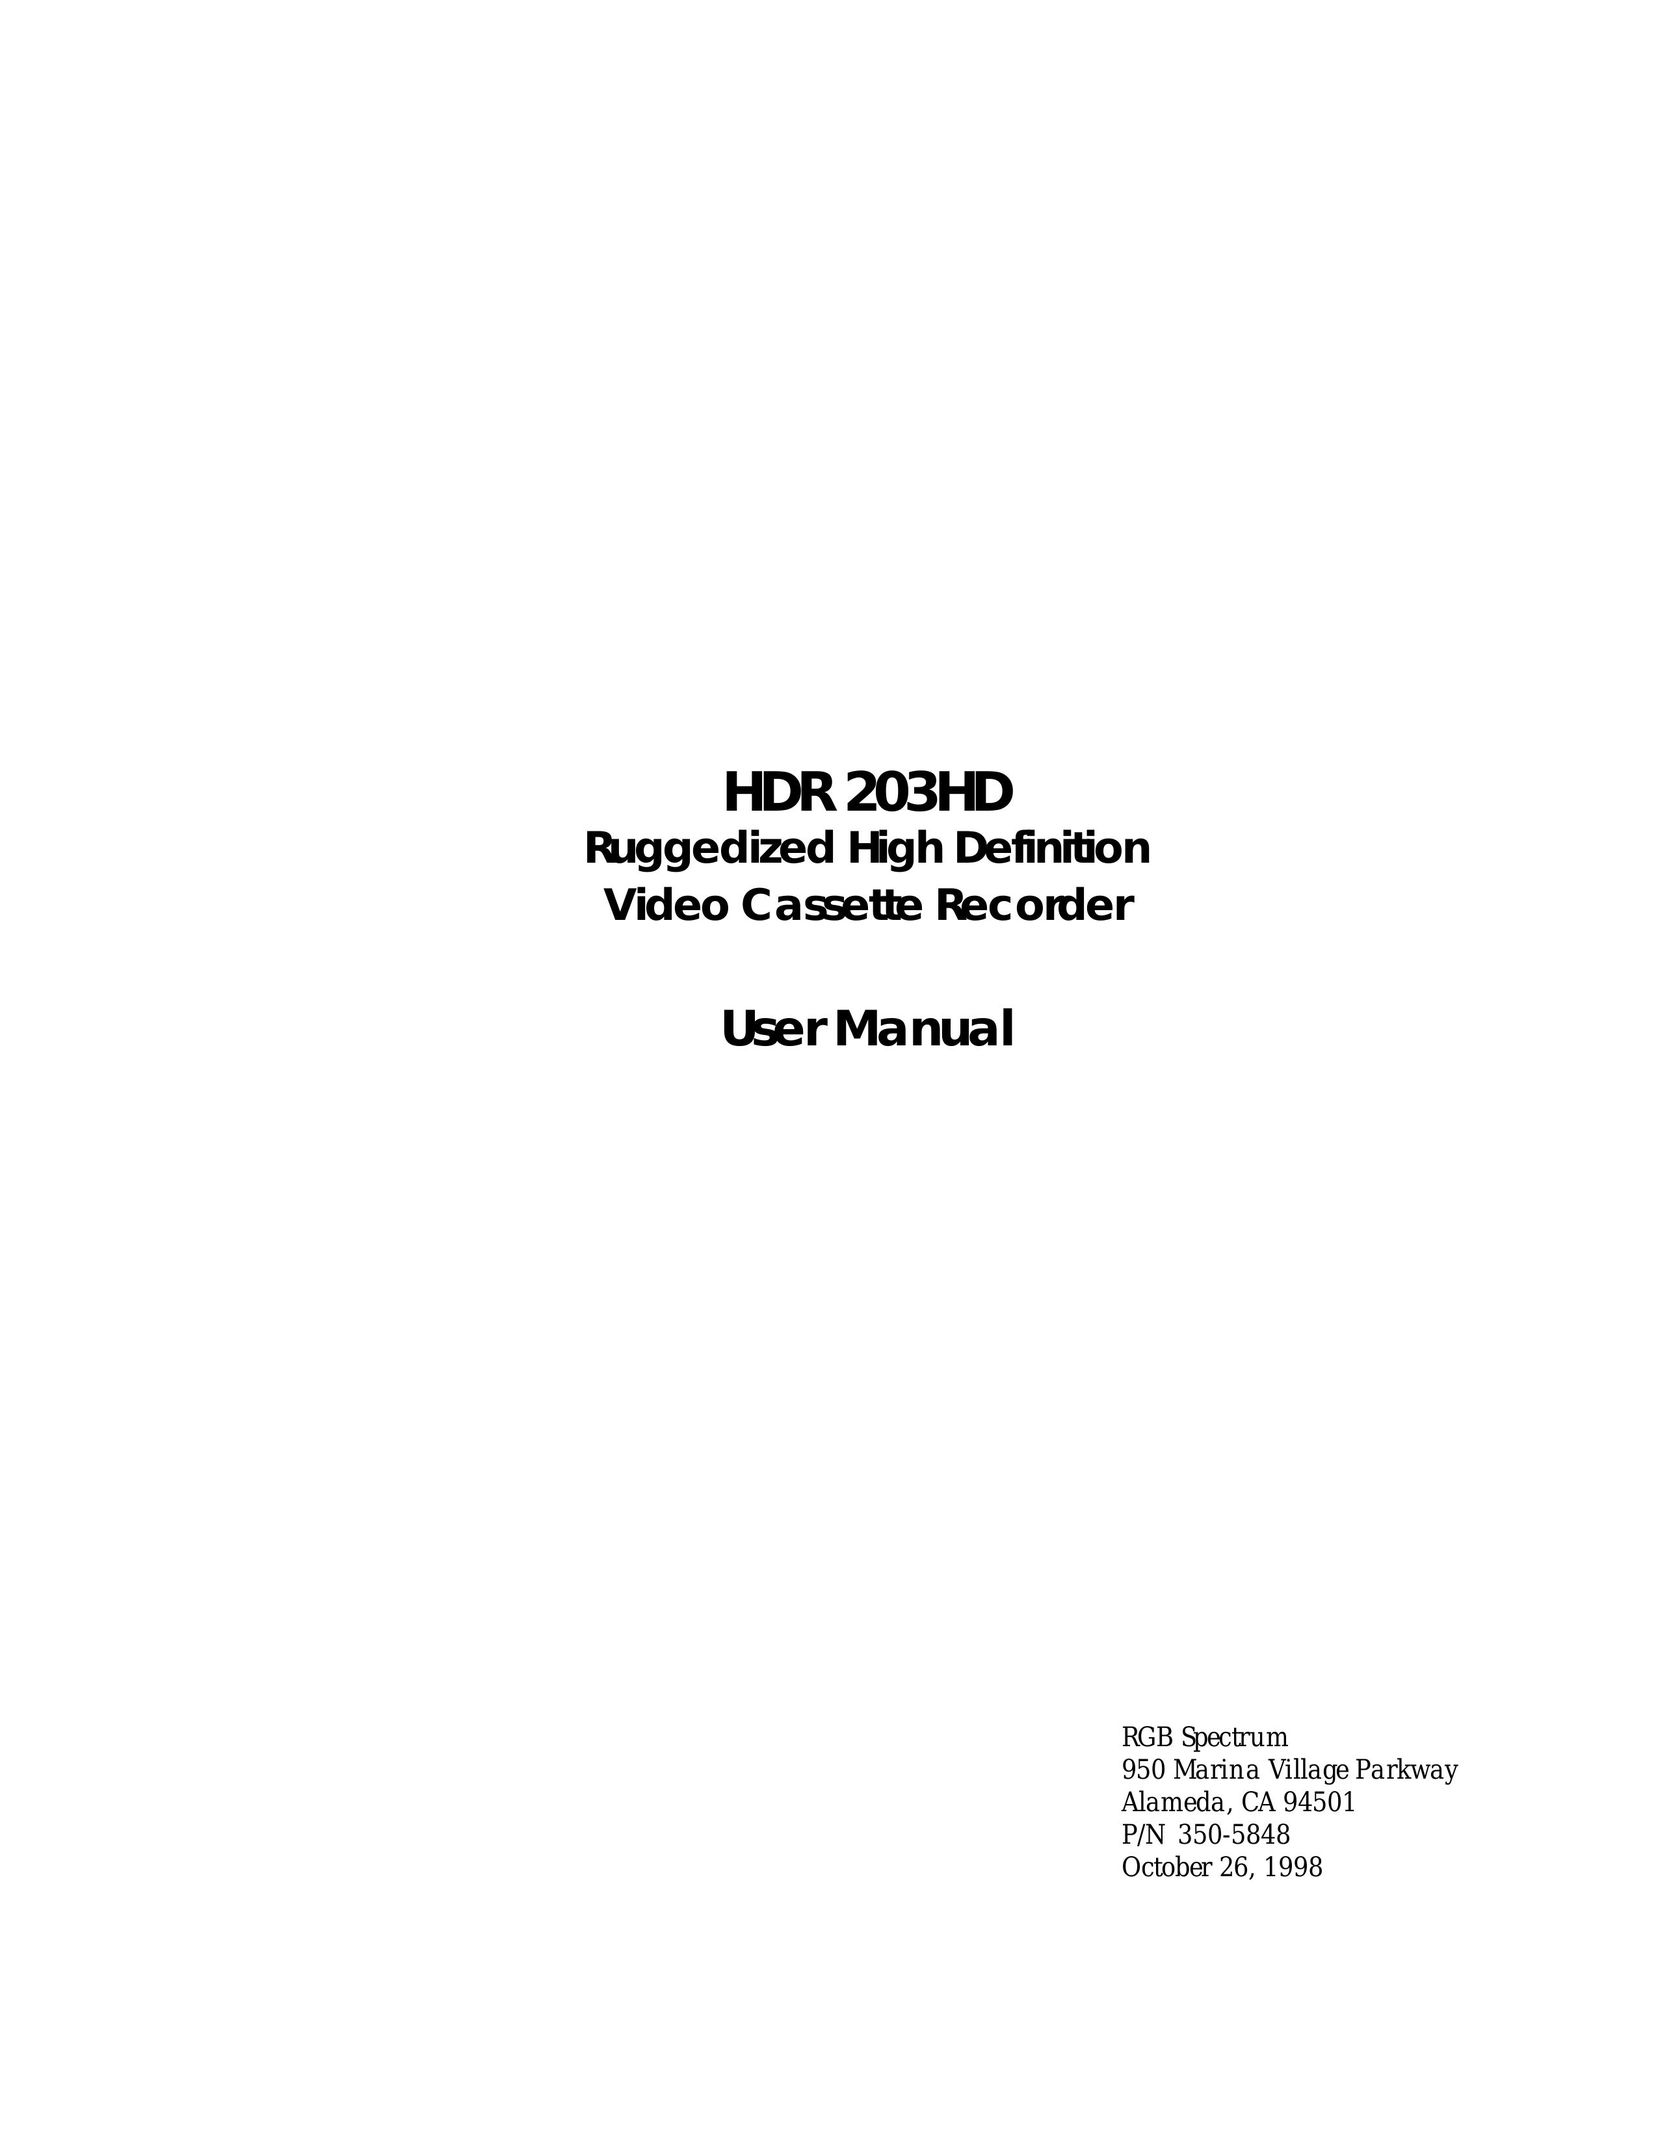 RGB Spectrum HDR 203HD VCR User Manual